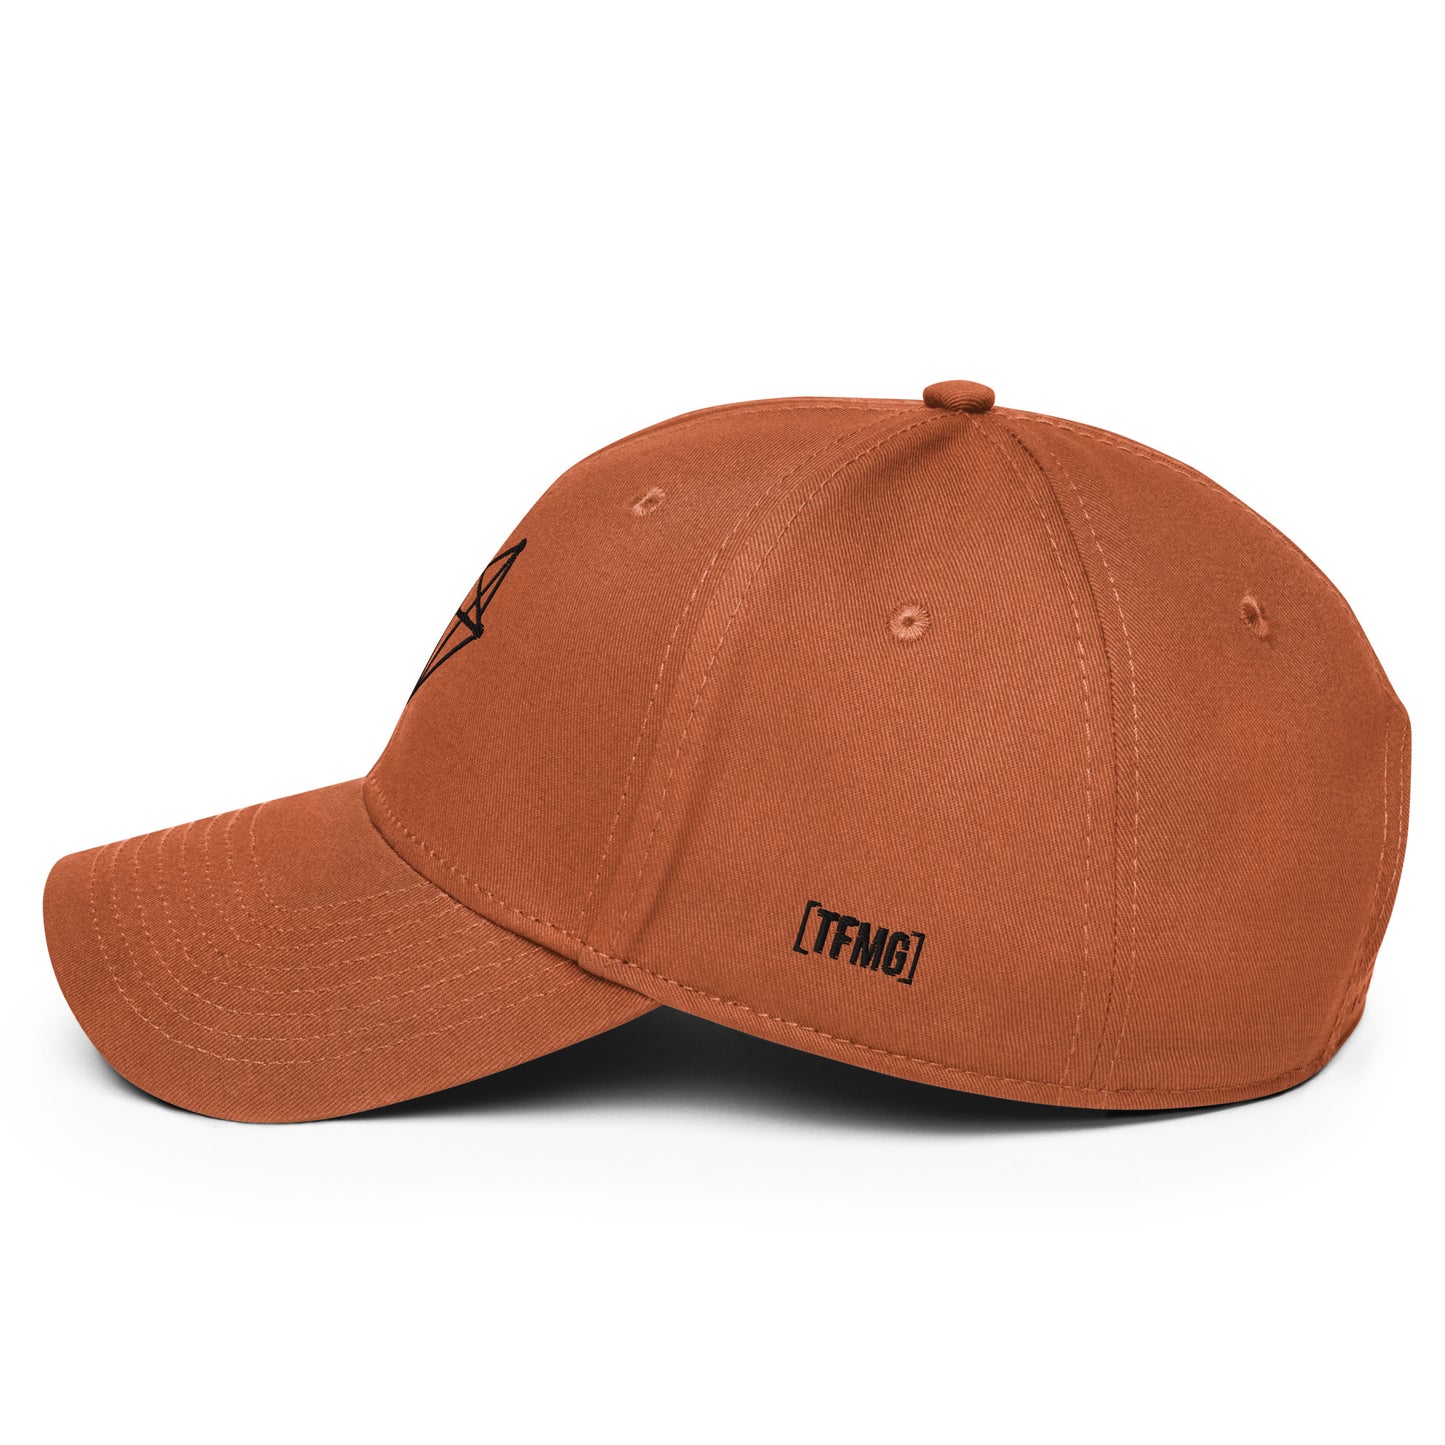 Structured baseball cap - Orange